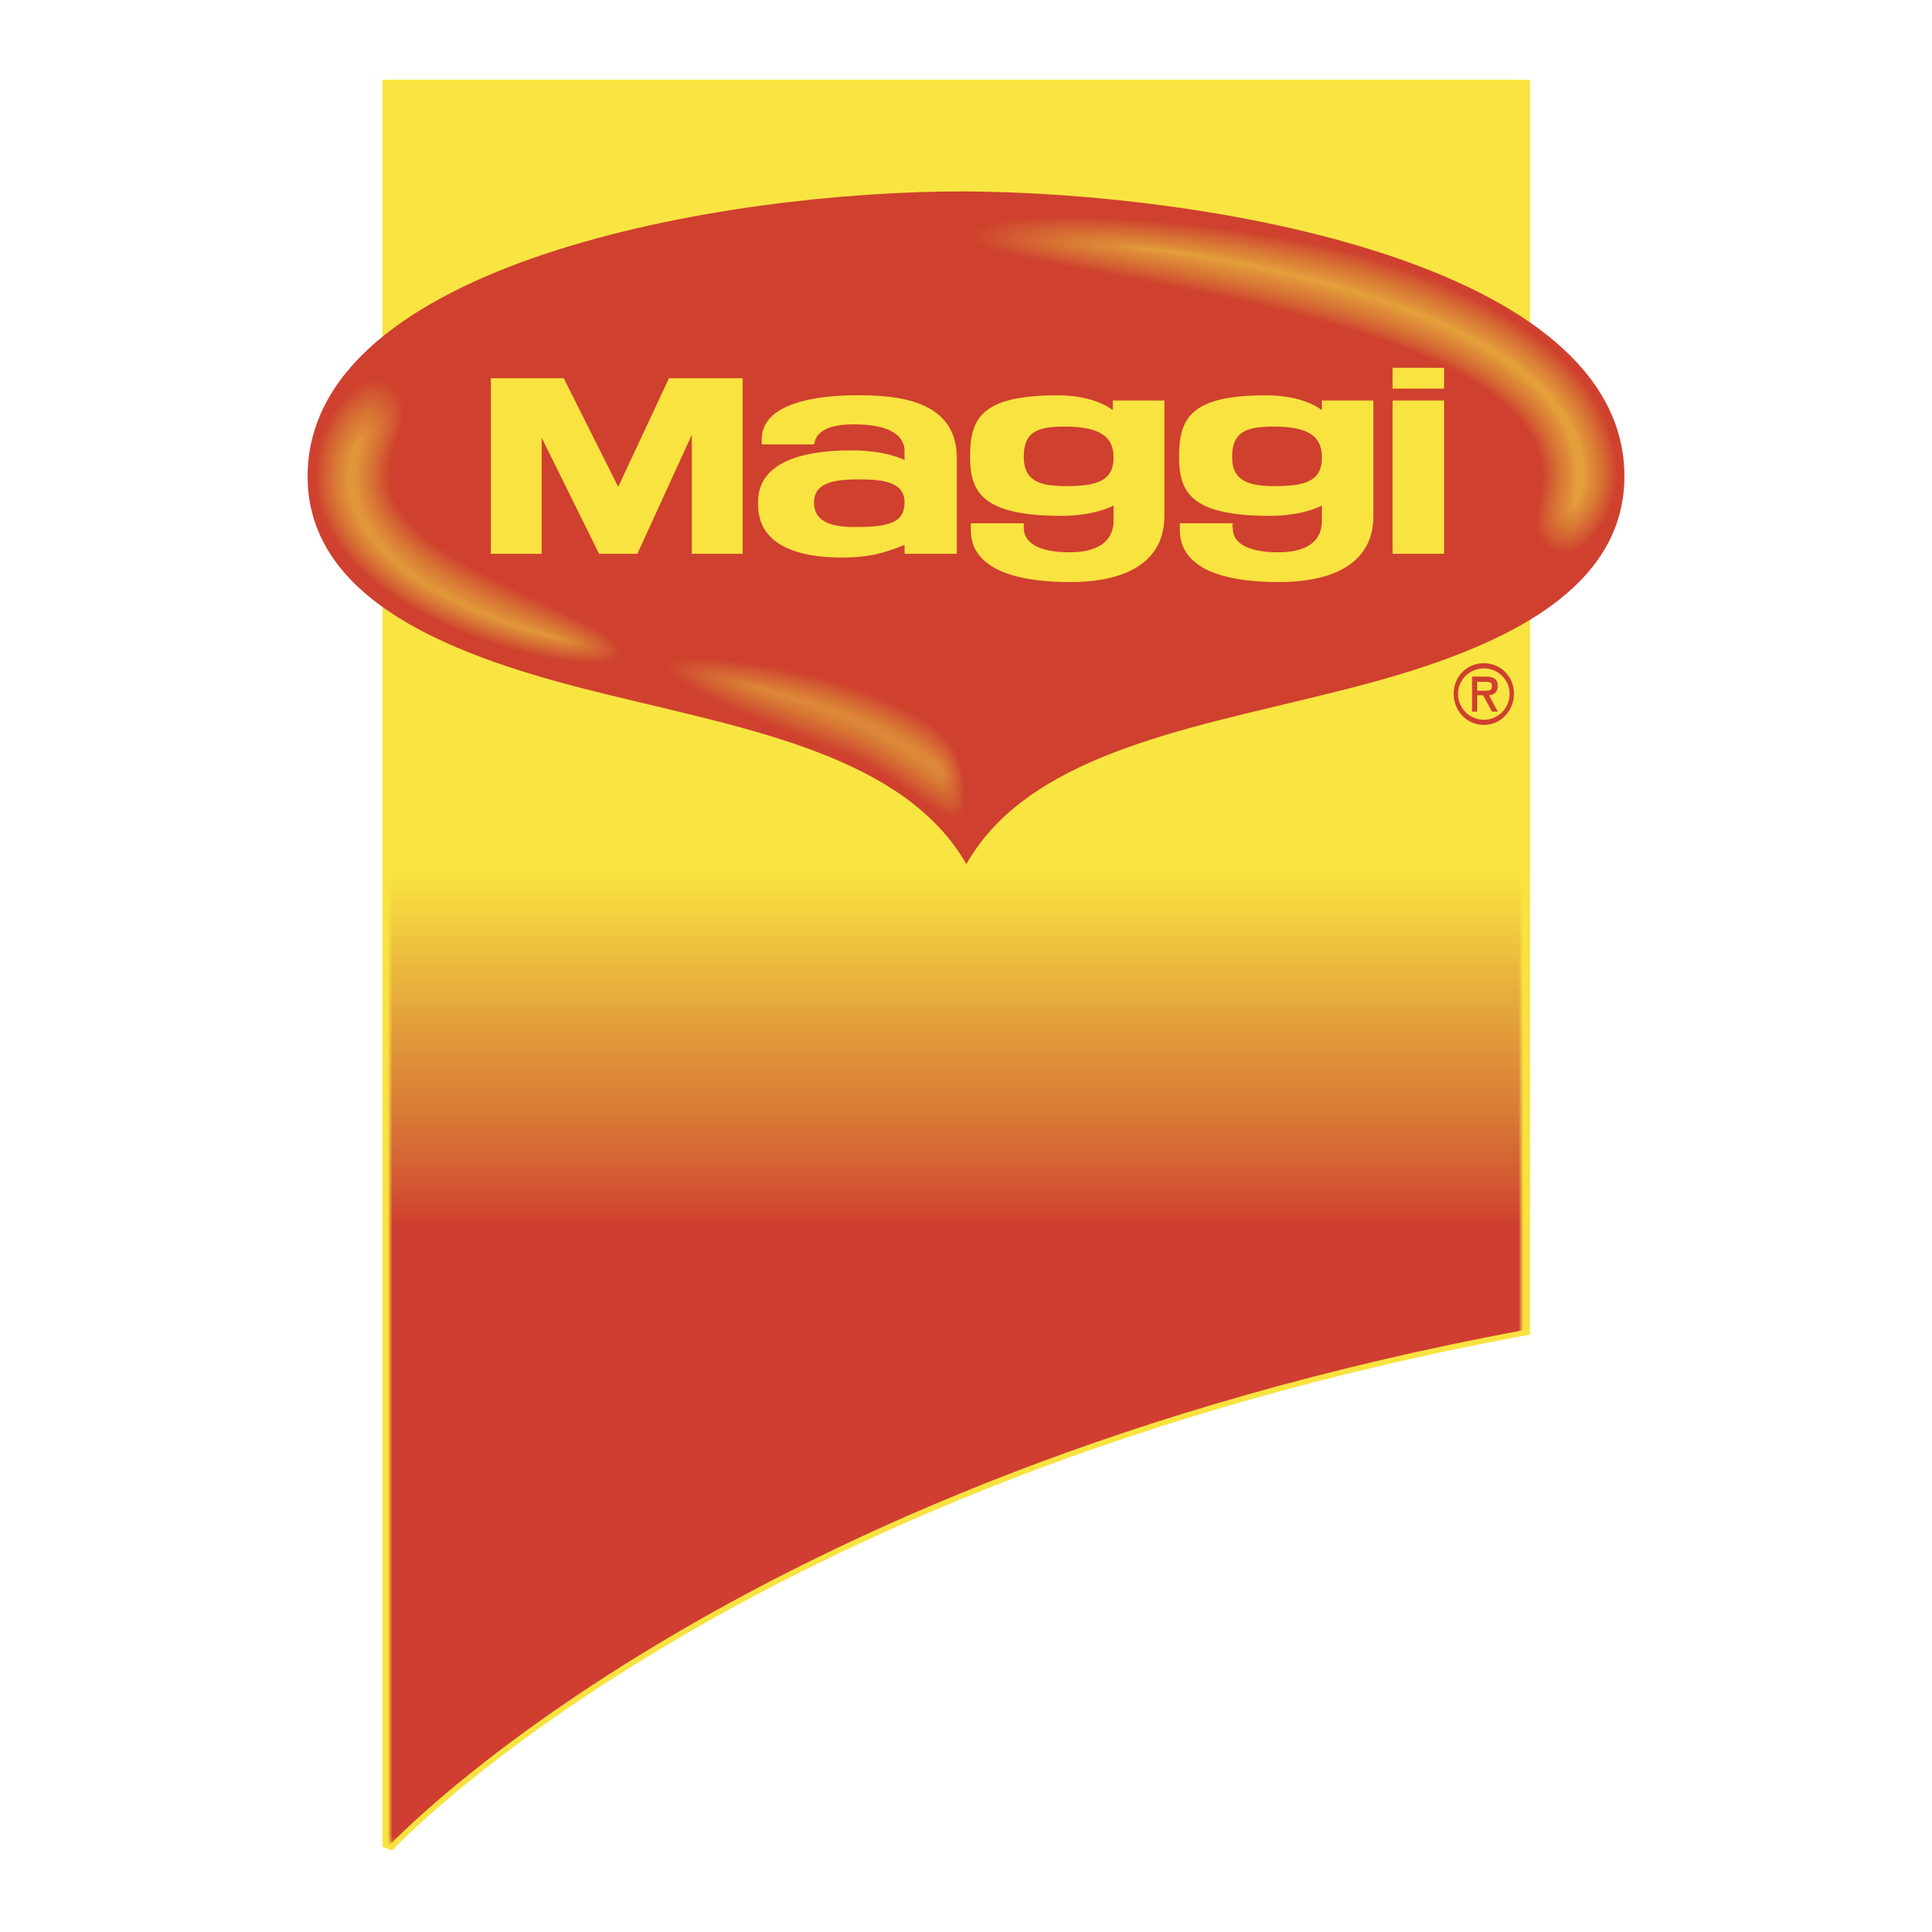 Maggi Logo - Maggi Logo PNG Transparent & SVG Vector - Freebie Supply